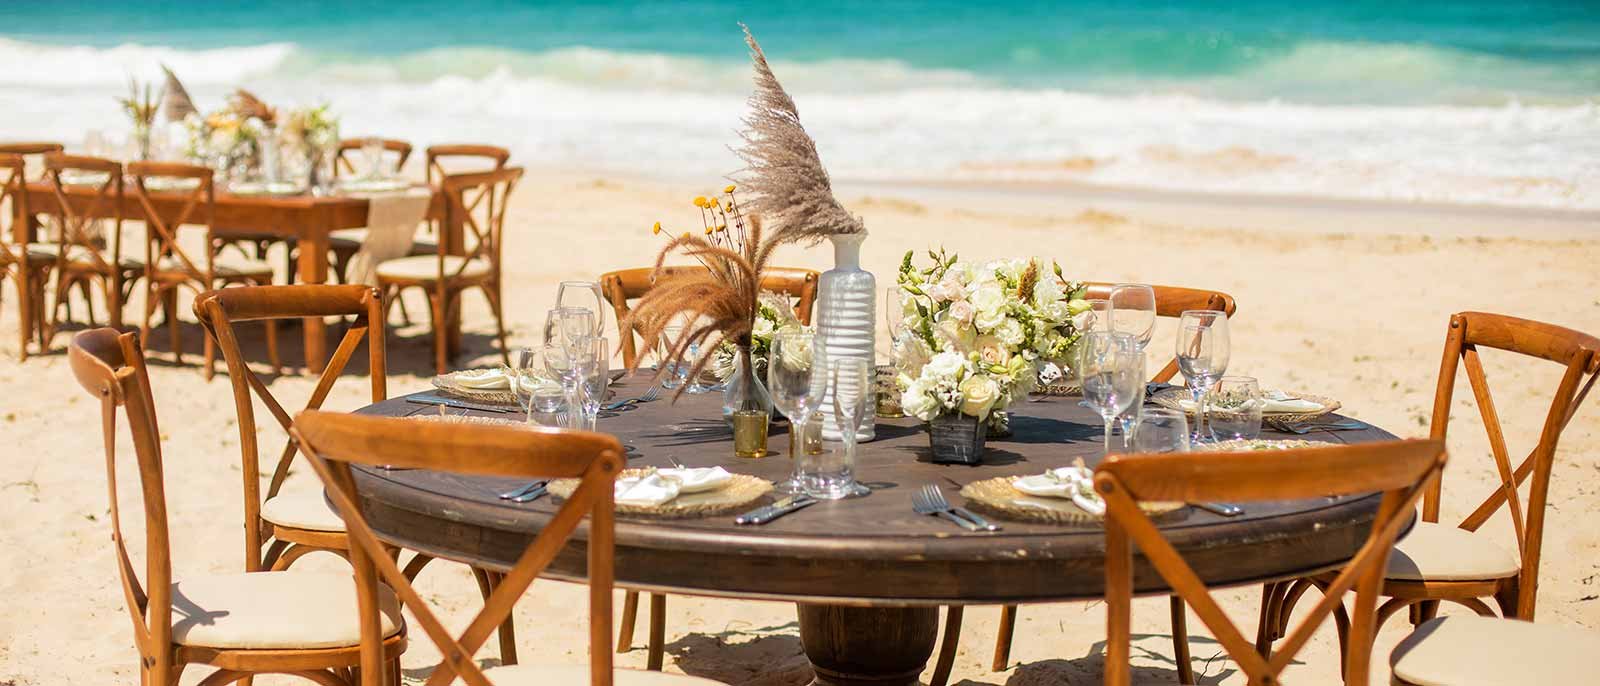 Hard-Rock-Hotel-Cancun-free-spirit-reception-table.jpg